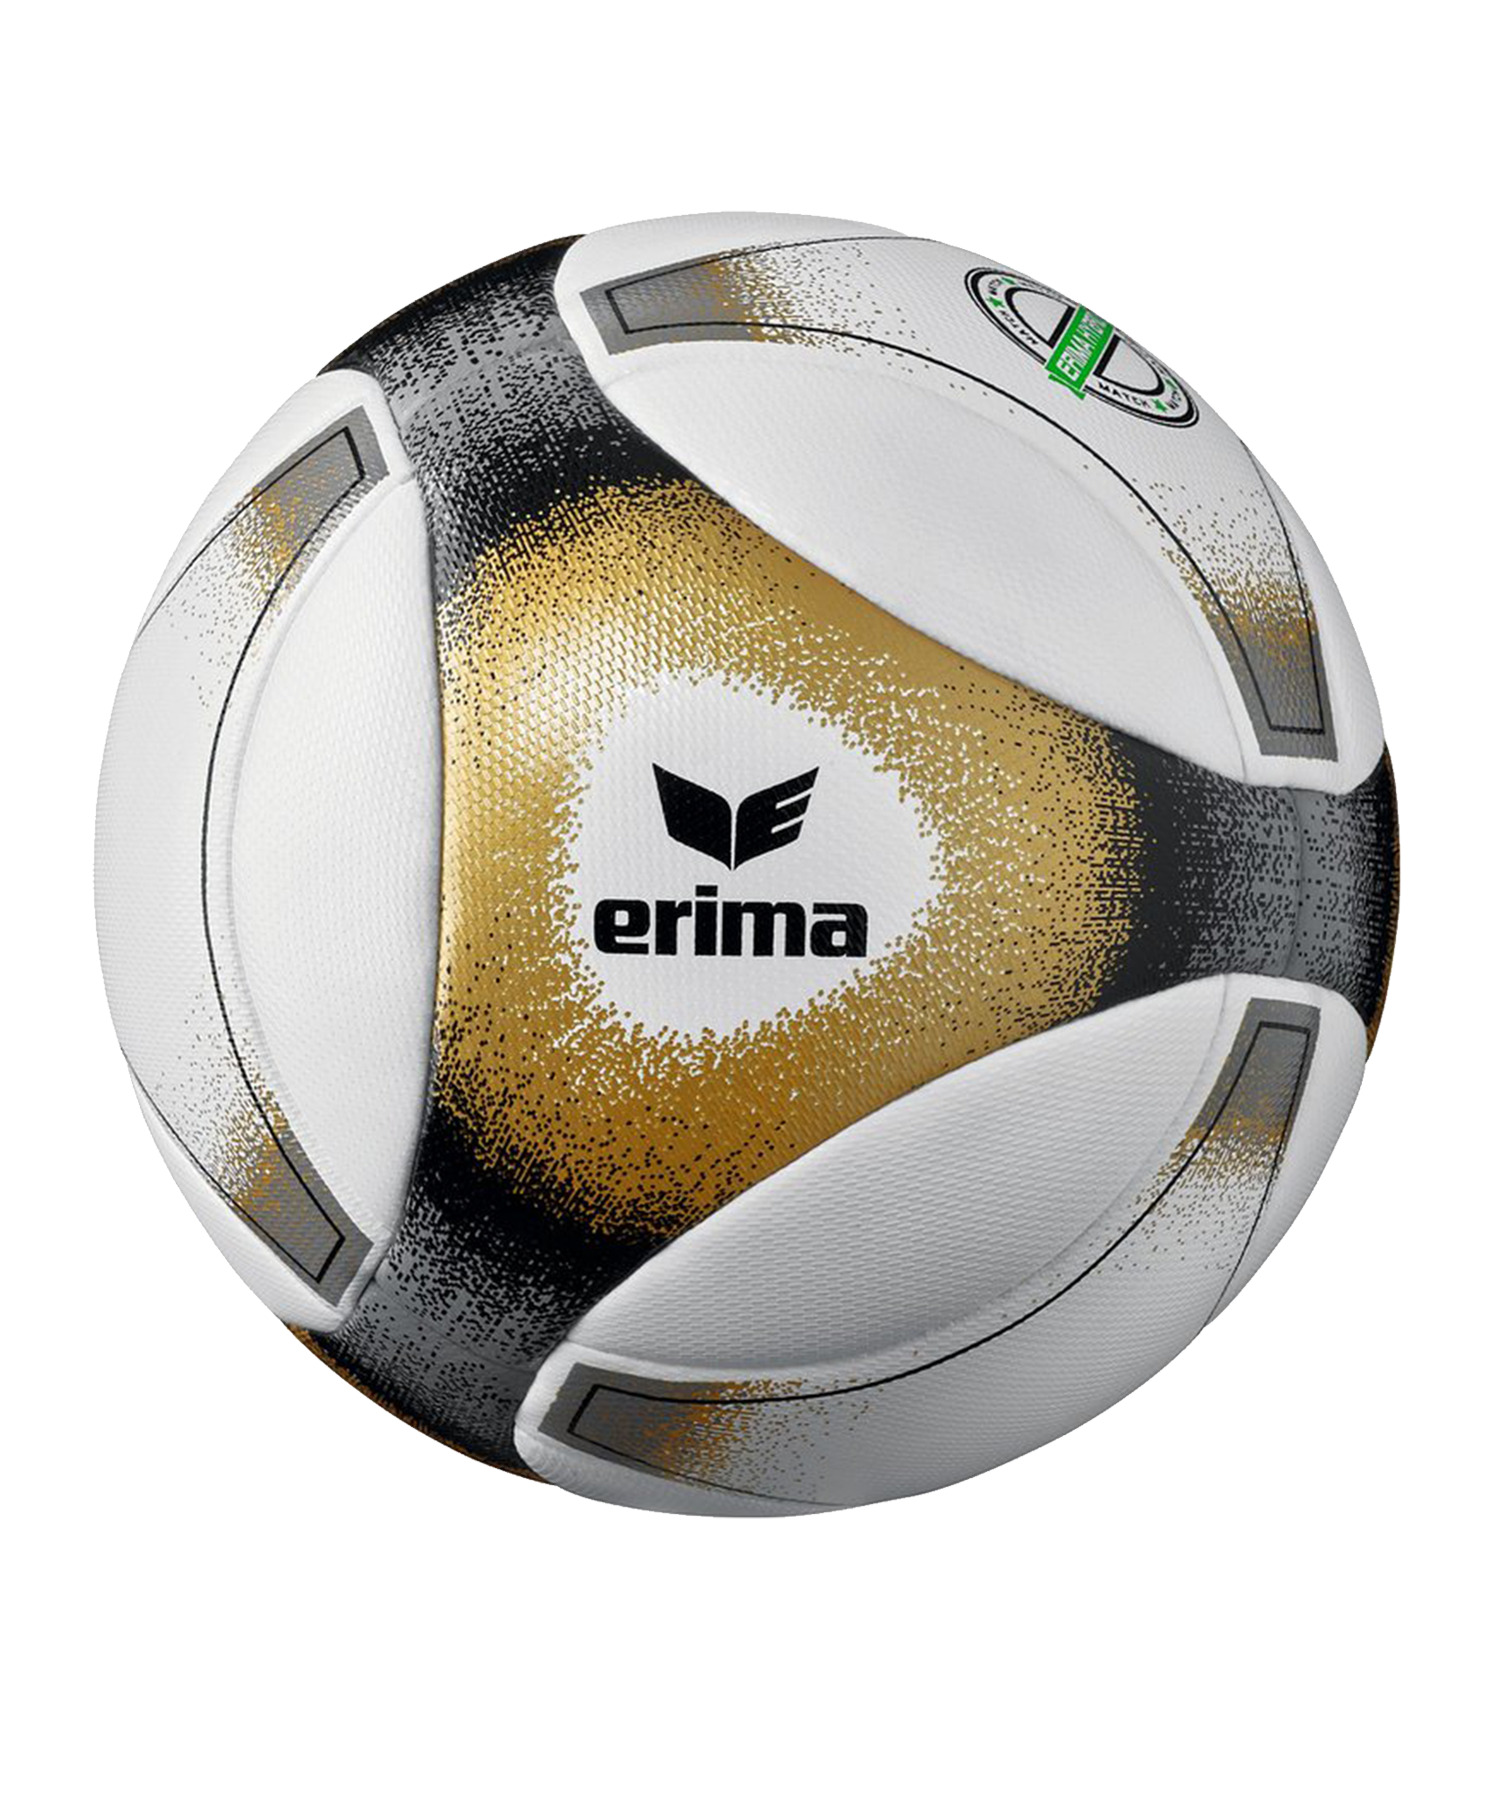 Erima Senzor Ambition Fußball FIFA Quality Pro Größe 5 NEU 90949